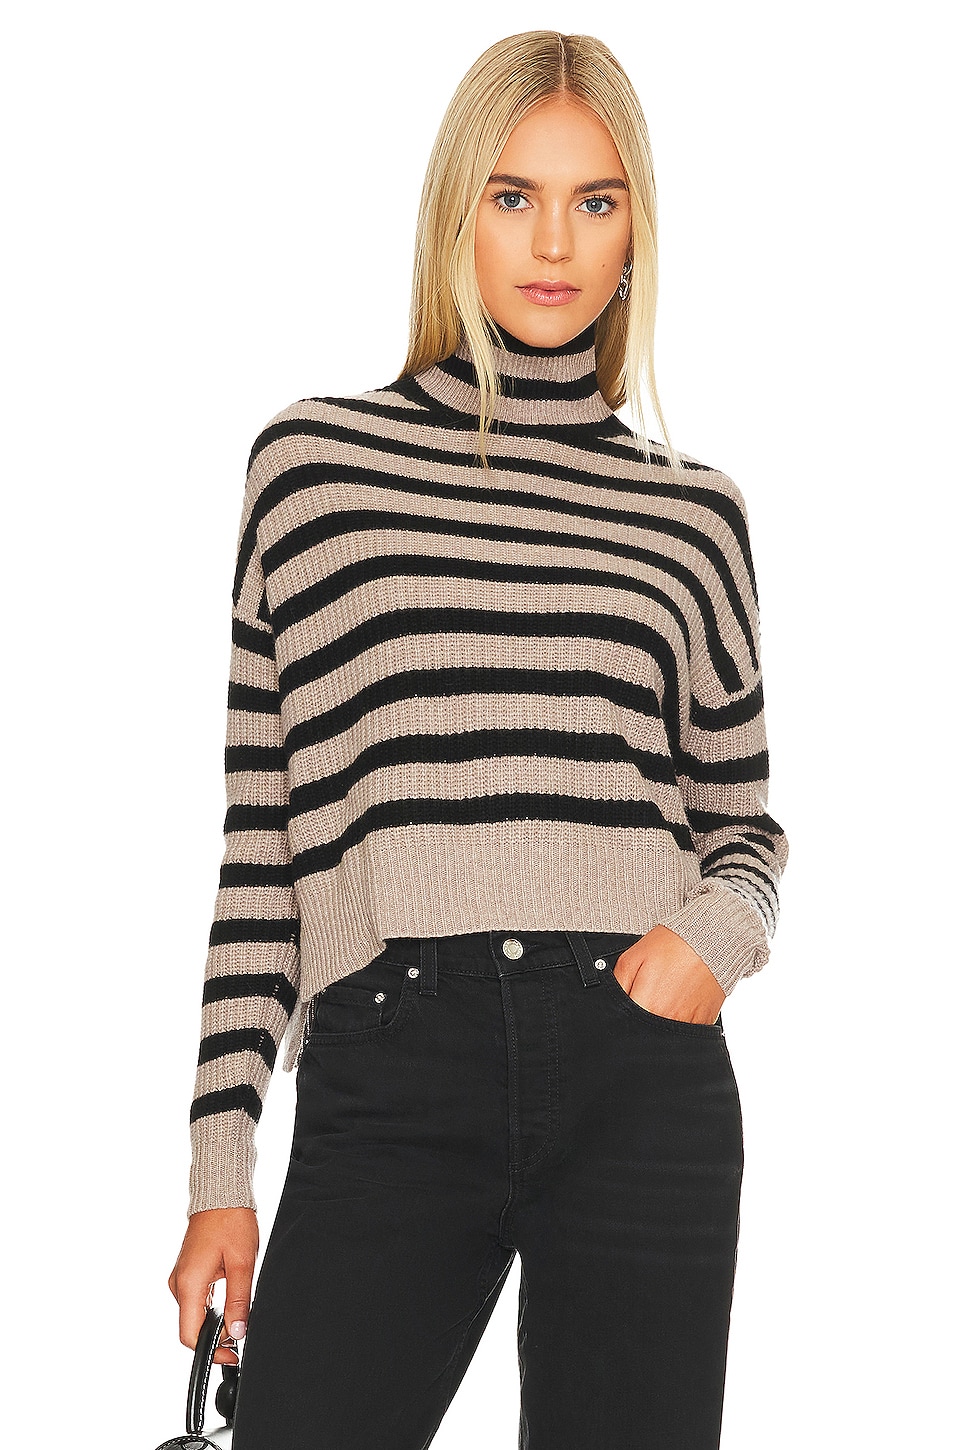 Autumn Cashmere Striped Turtleneck Sweater in Stone & Black | REVOLVE